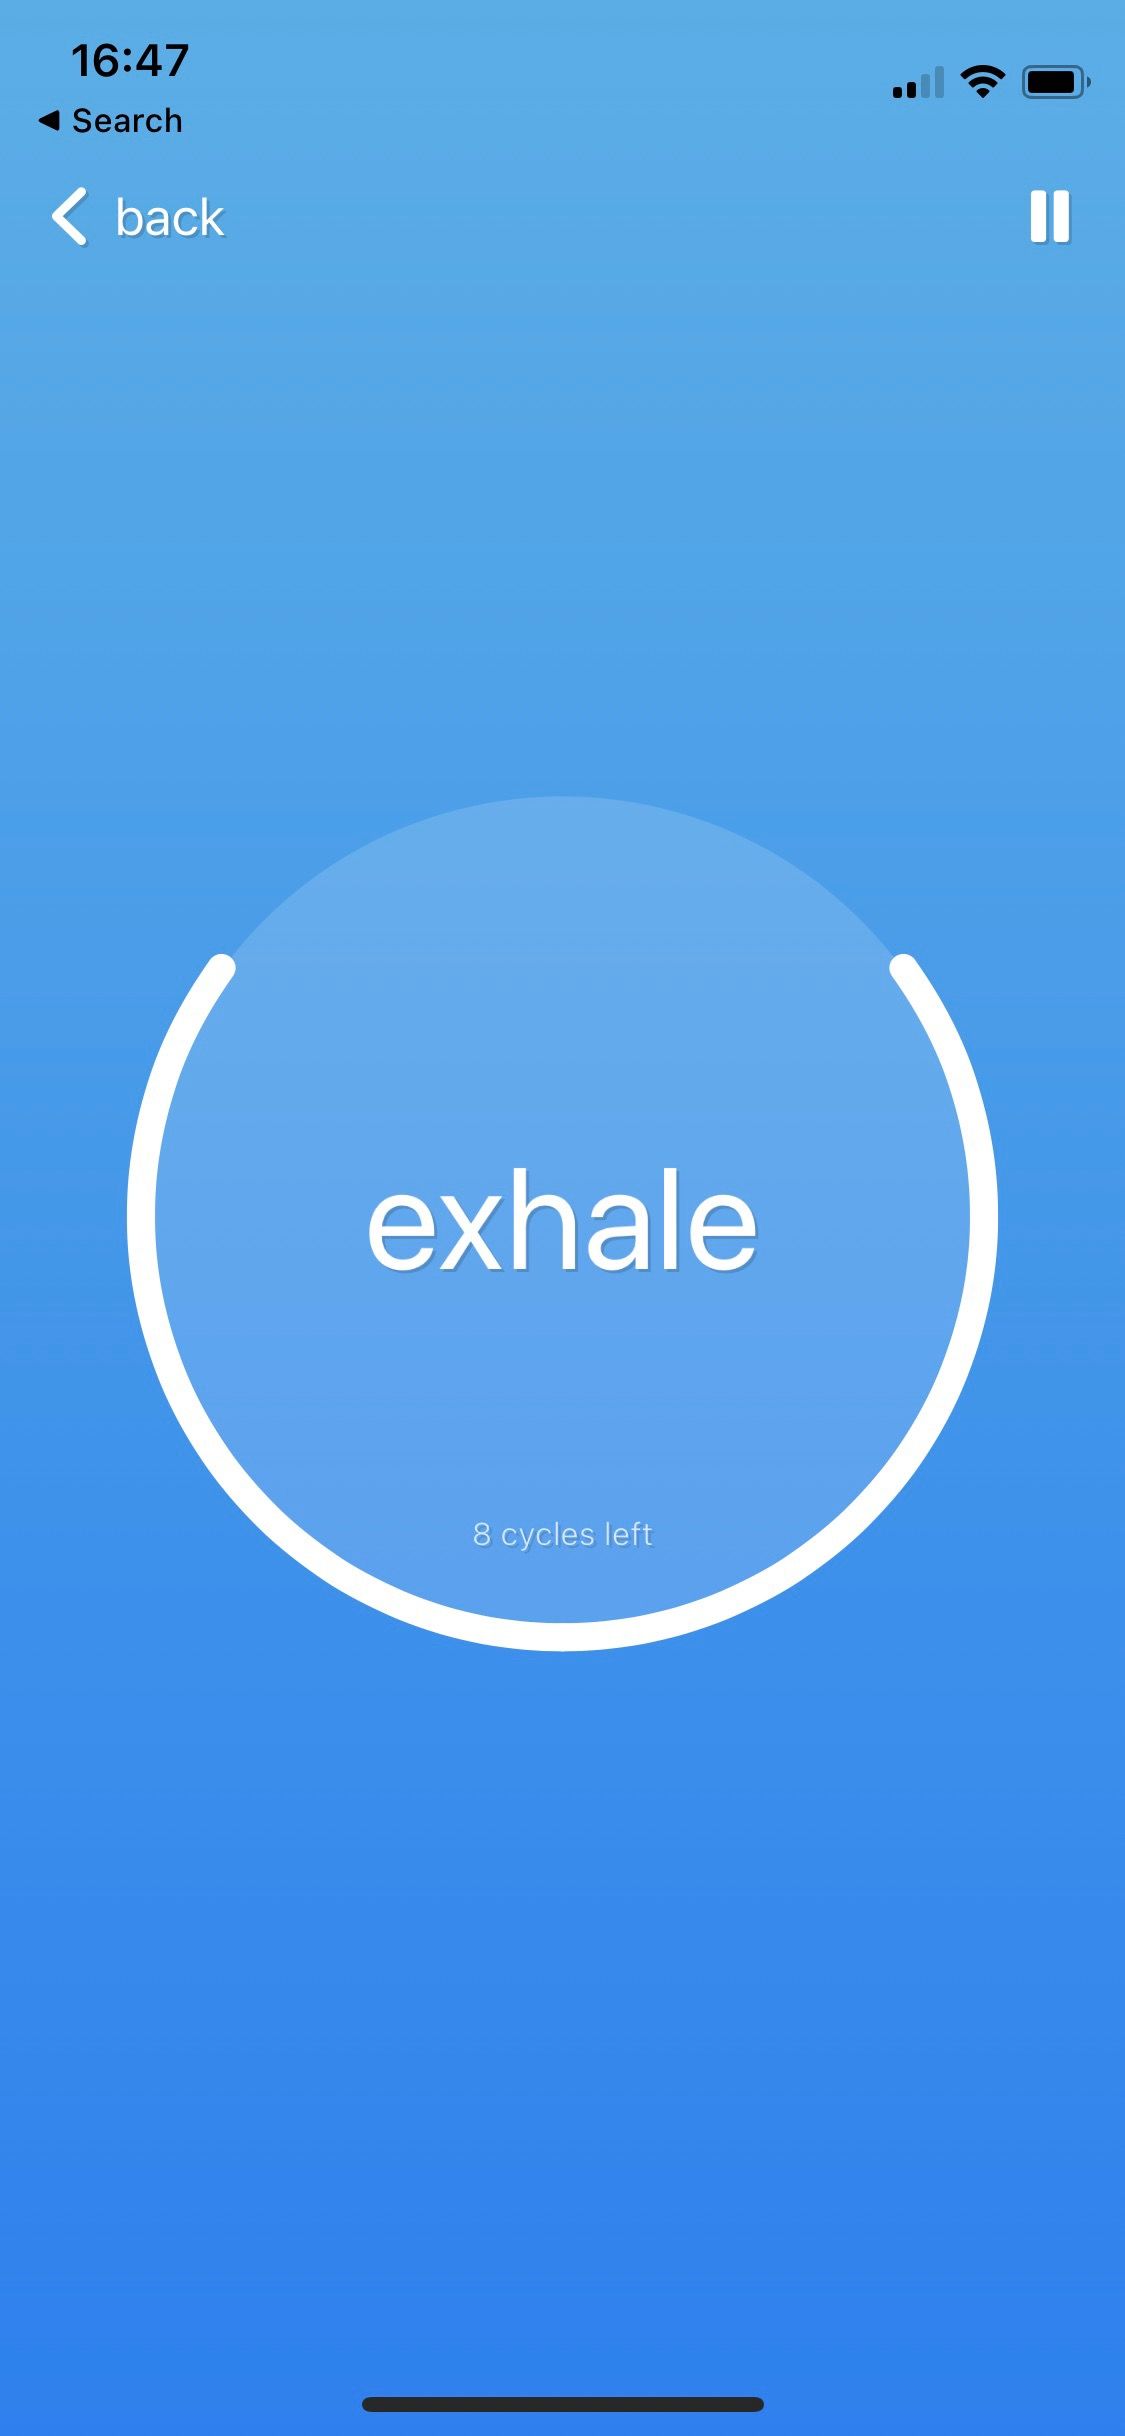 Screenshot of iBreathe app exhale screen